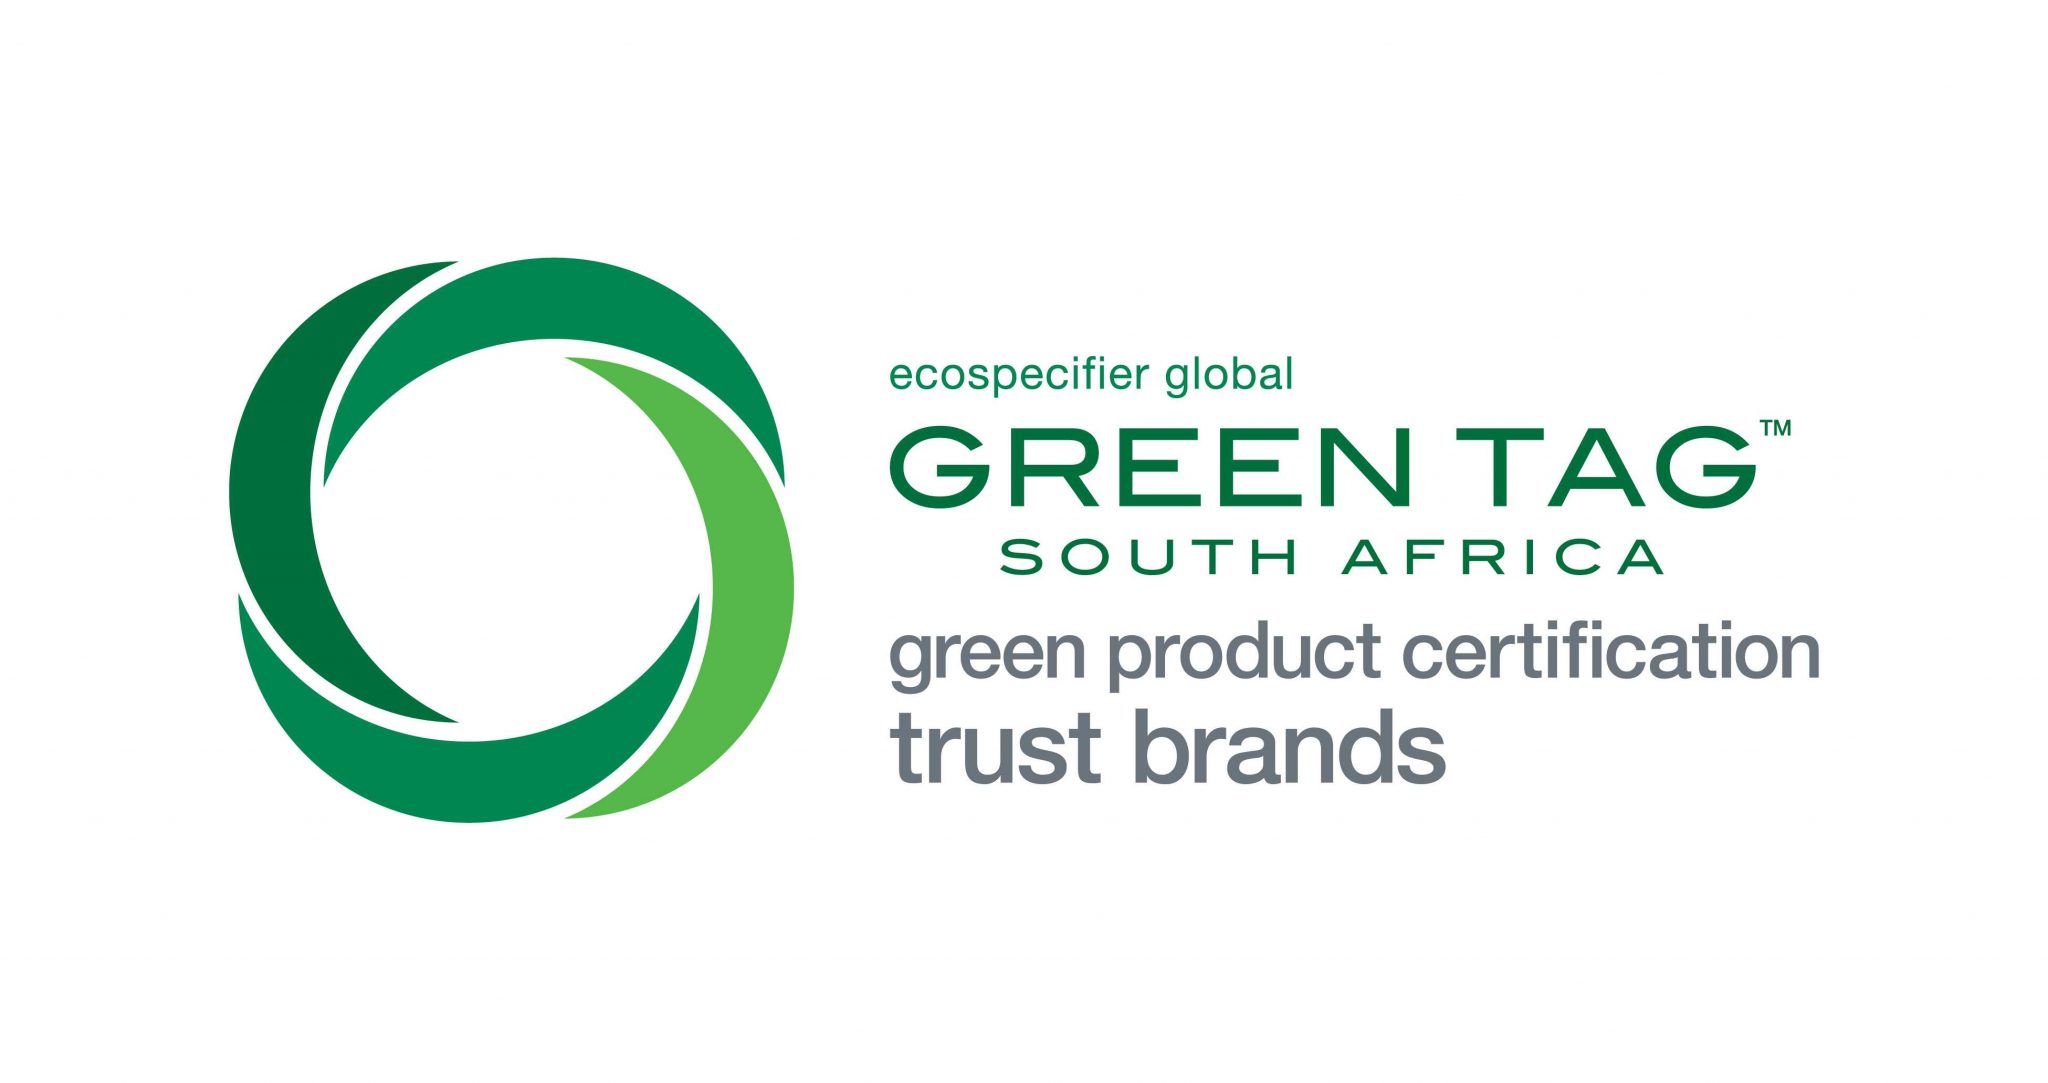 Global GreenTag South Africa